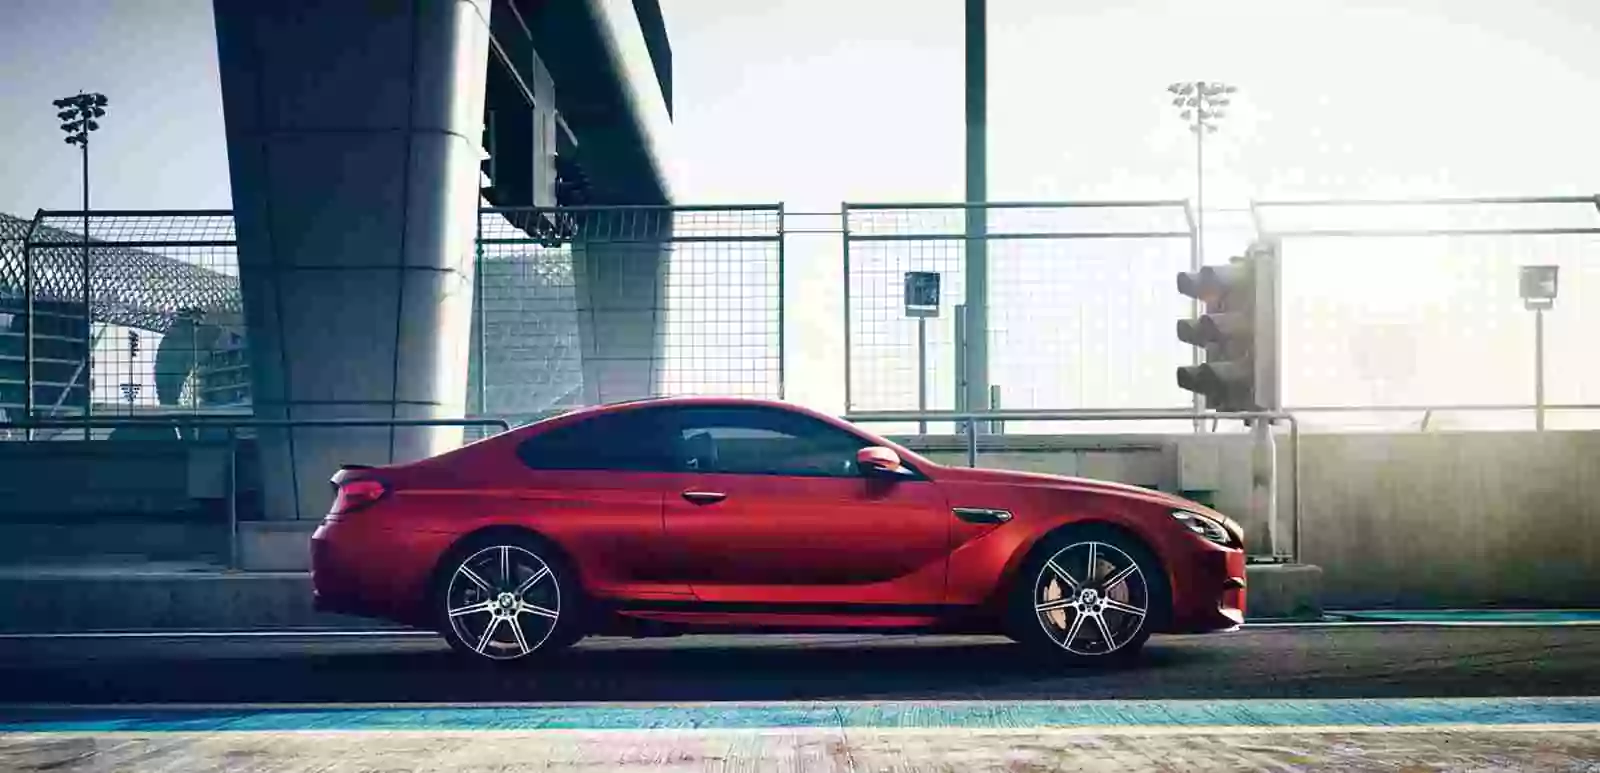 Hire BMW M6 Dubai 